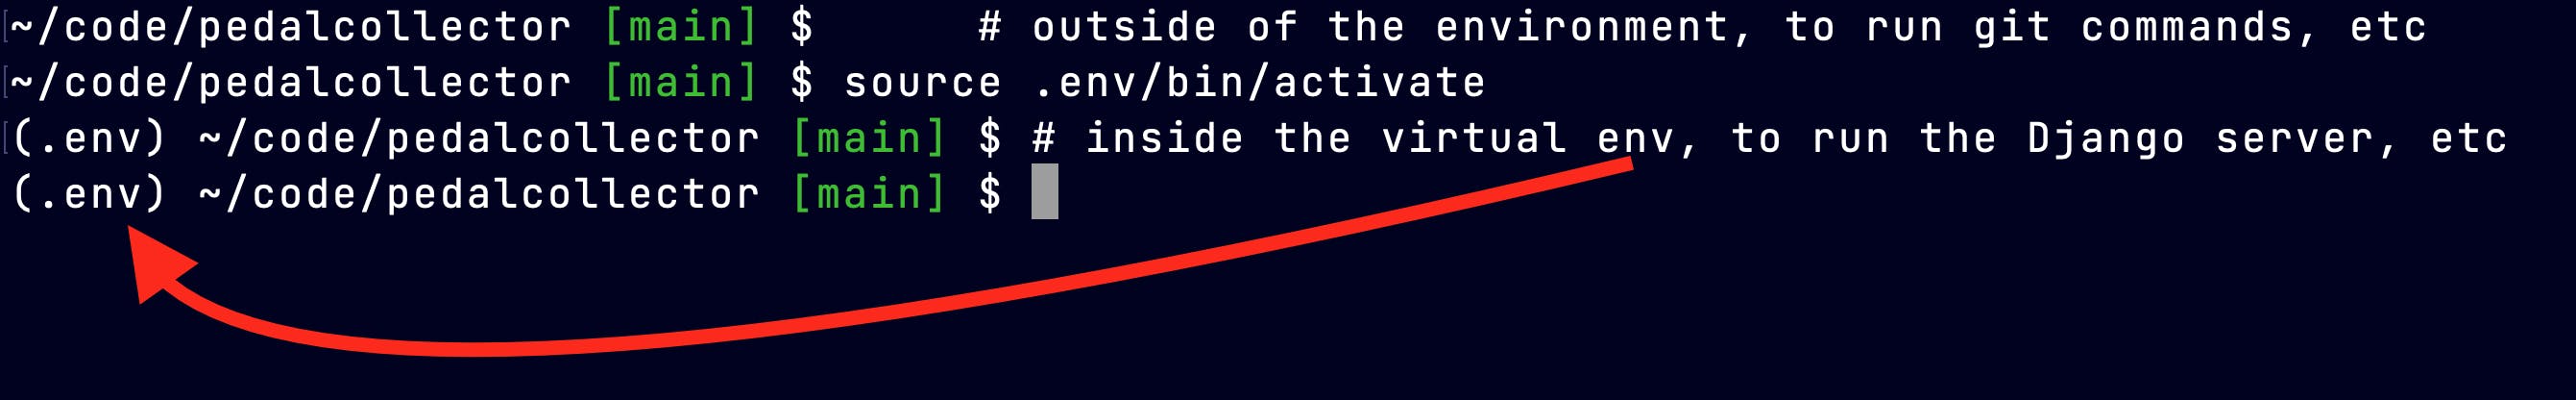 command line prompt showing parentheses env